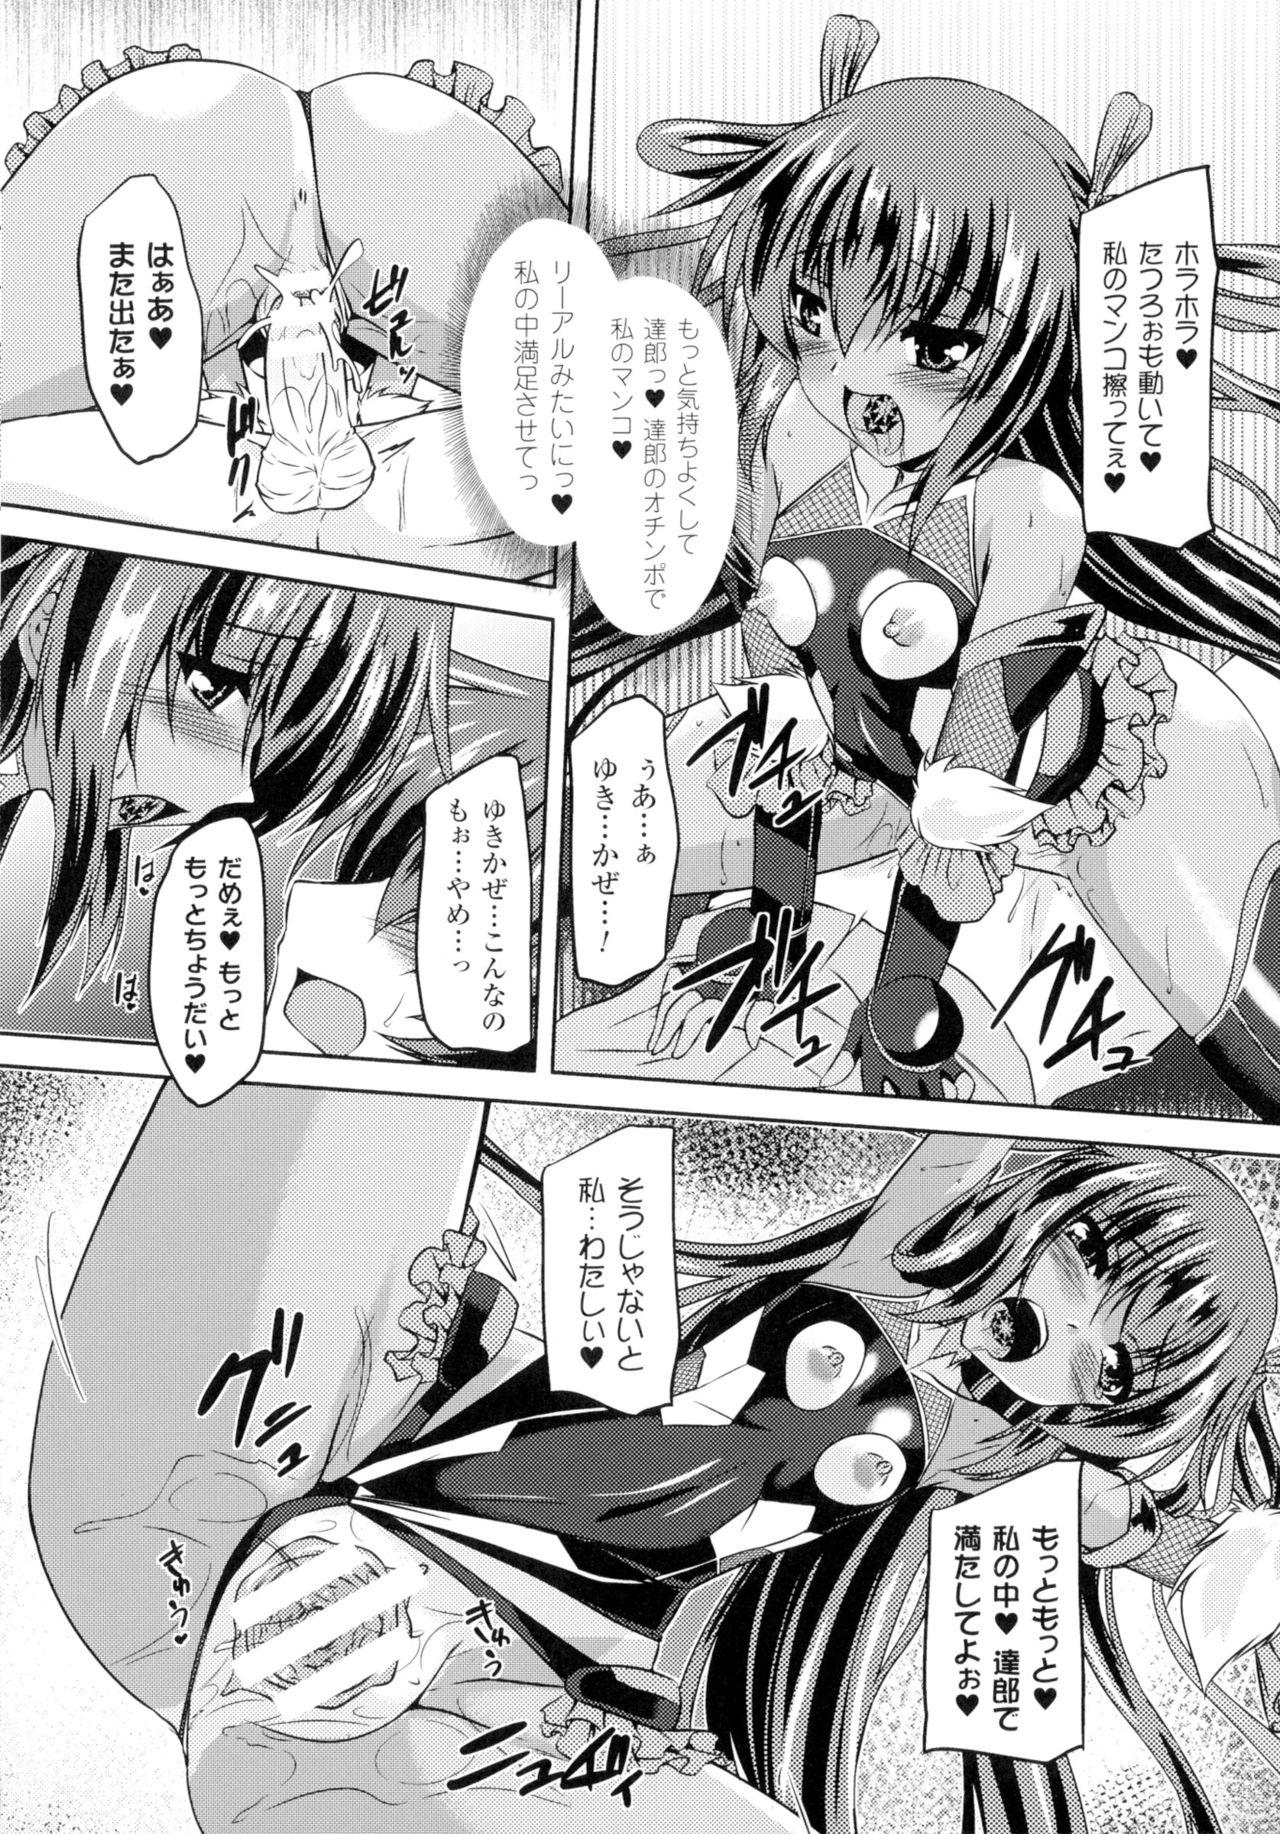 Seigi no Heroine Kangoku File DX Vol. 2 106